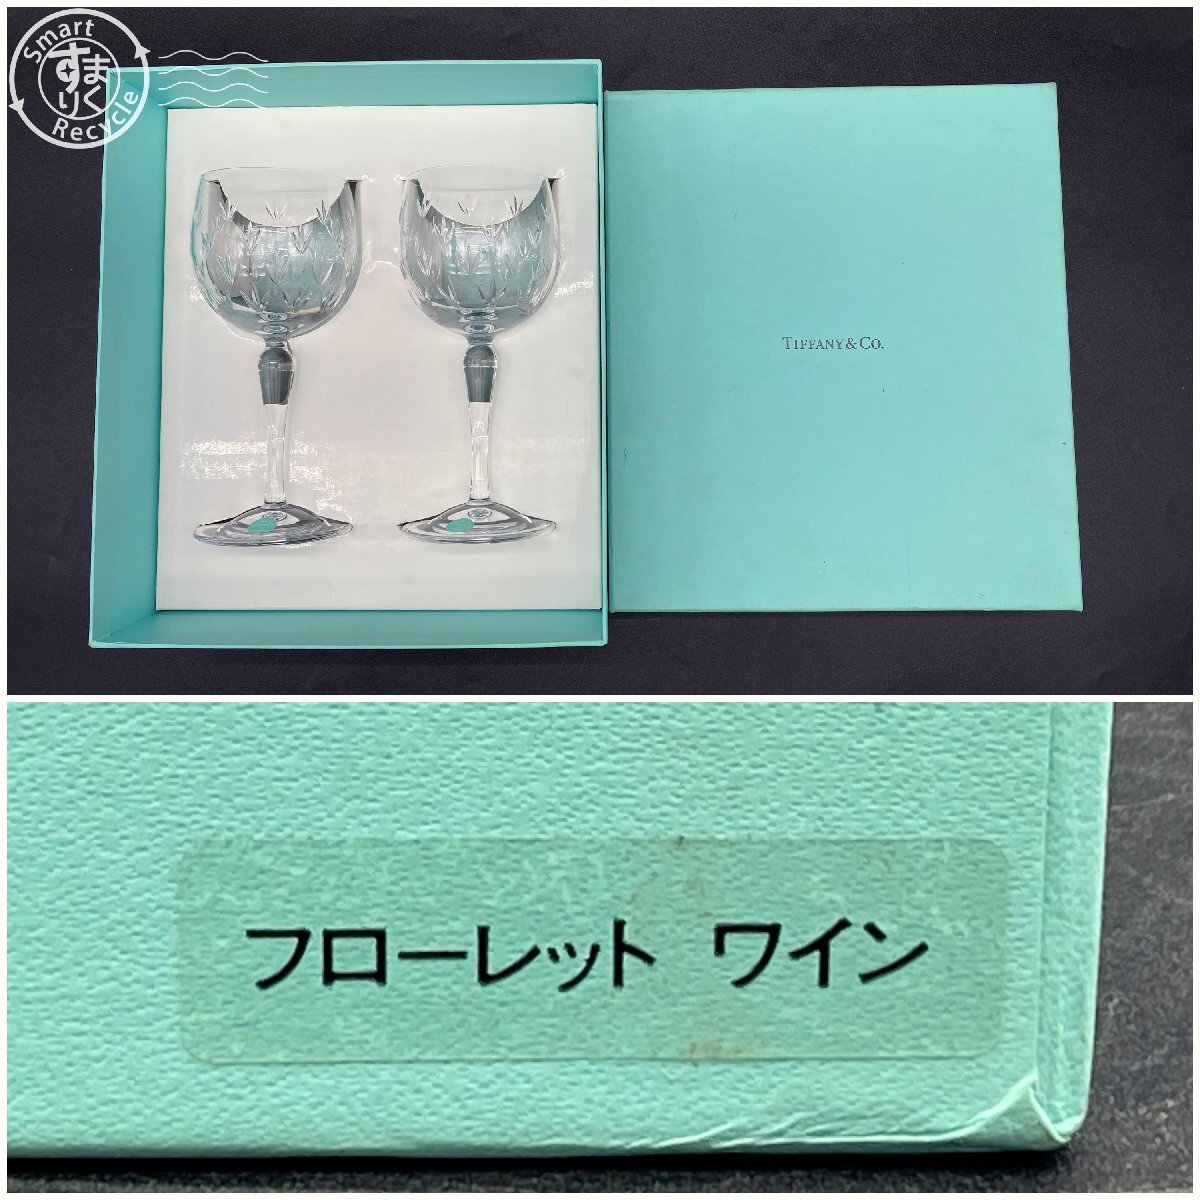 2405601130 ^ TIFFANY&Co. Tiffany pair wine glass flow let 2 customer set box attaching brand tableware used 